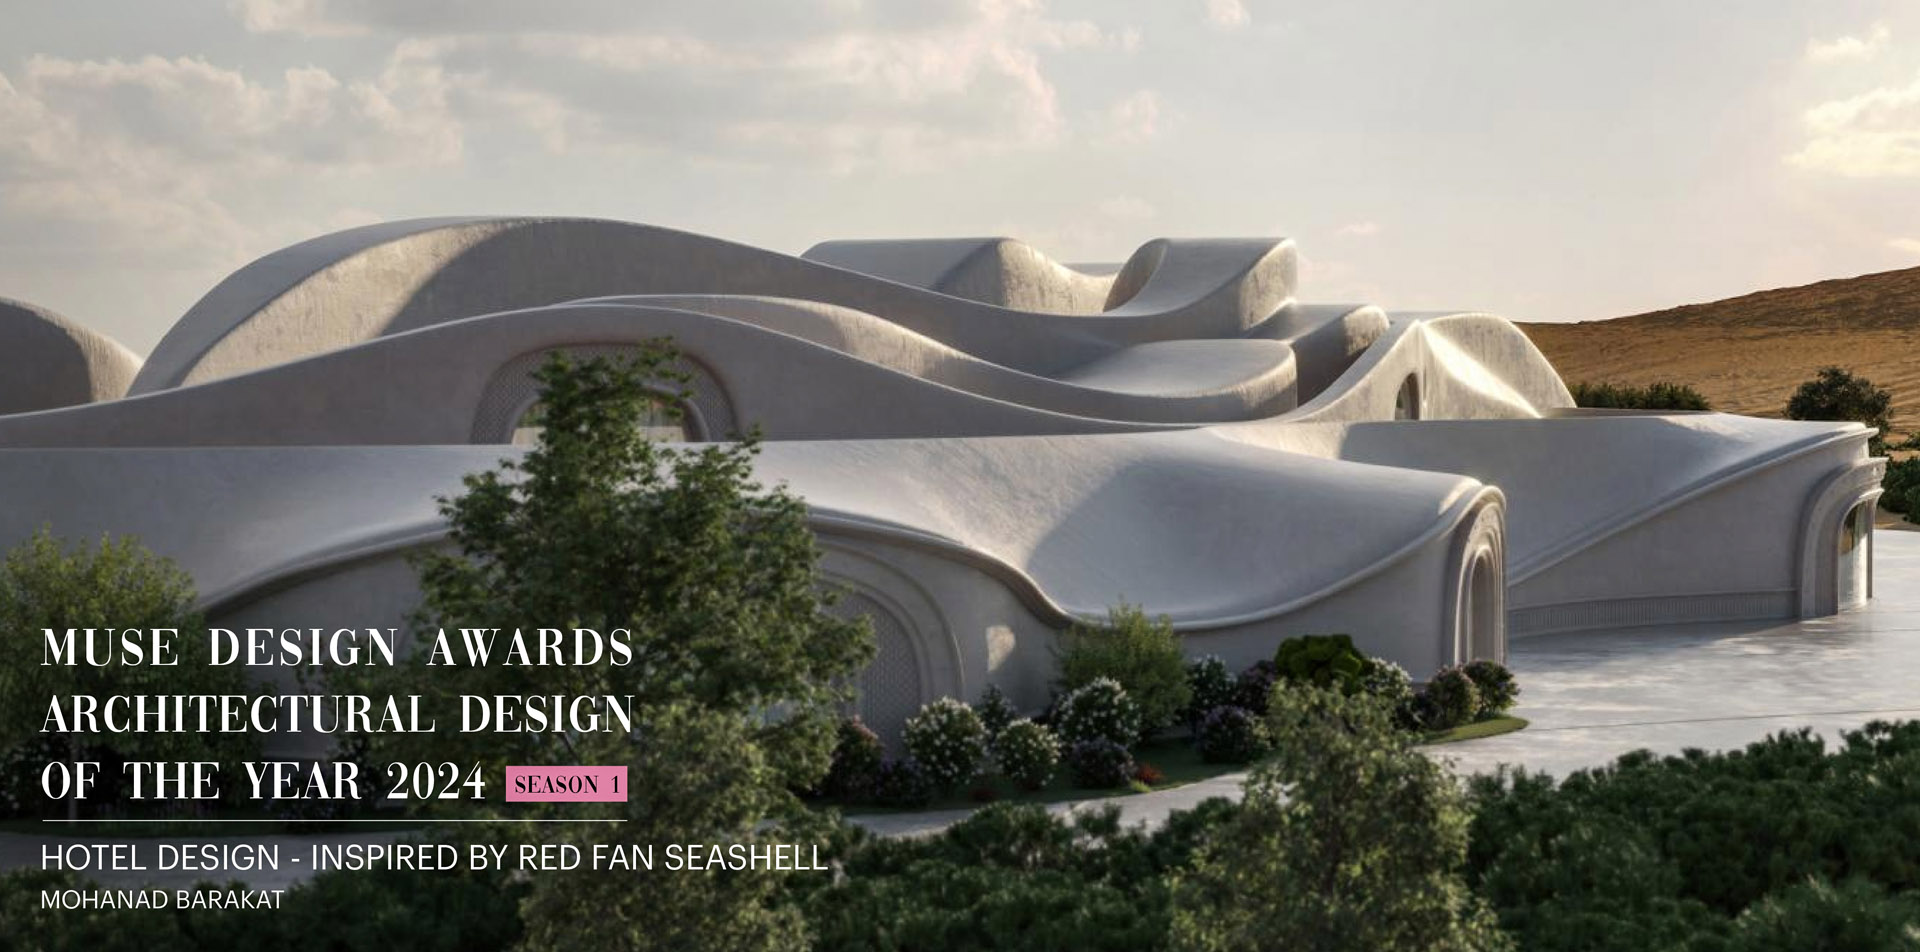 MUSE Design Awards - Architectural Design Awards 2023